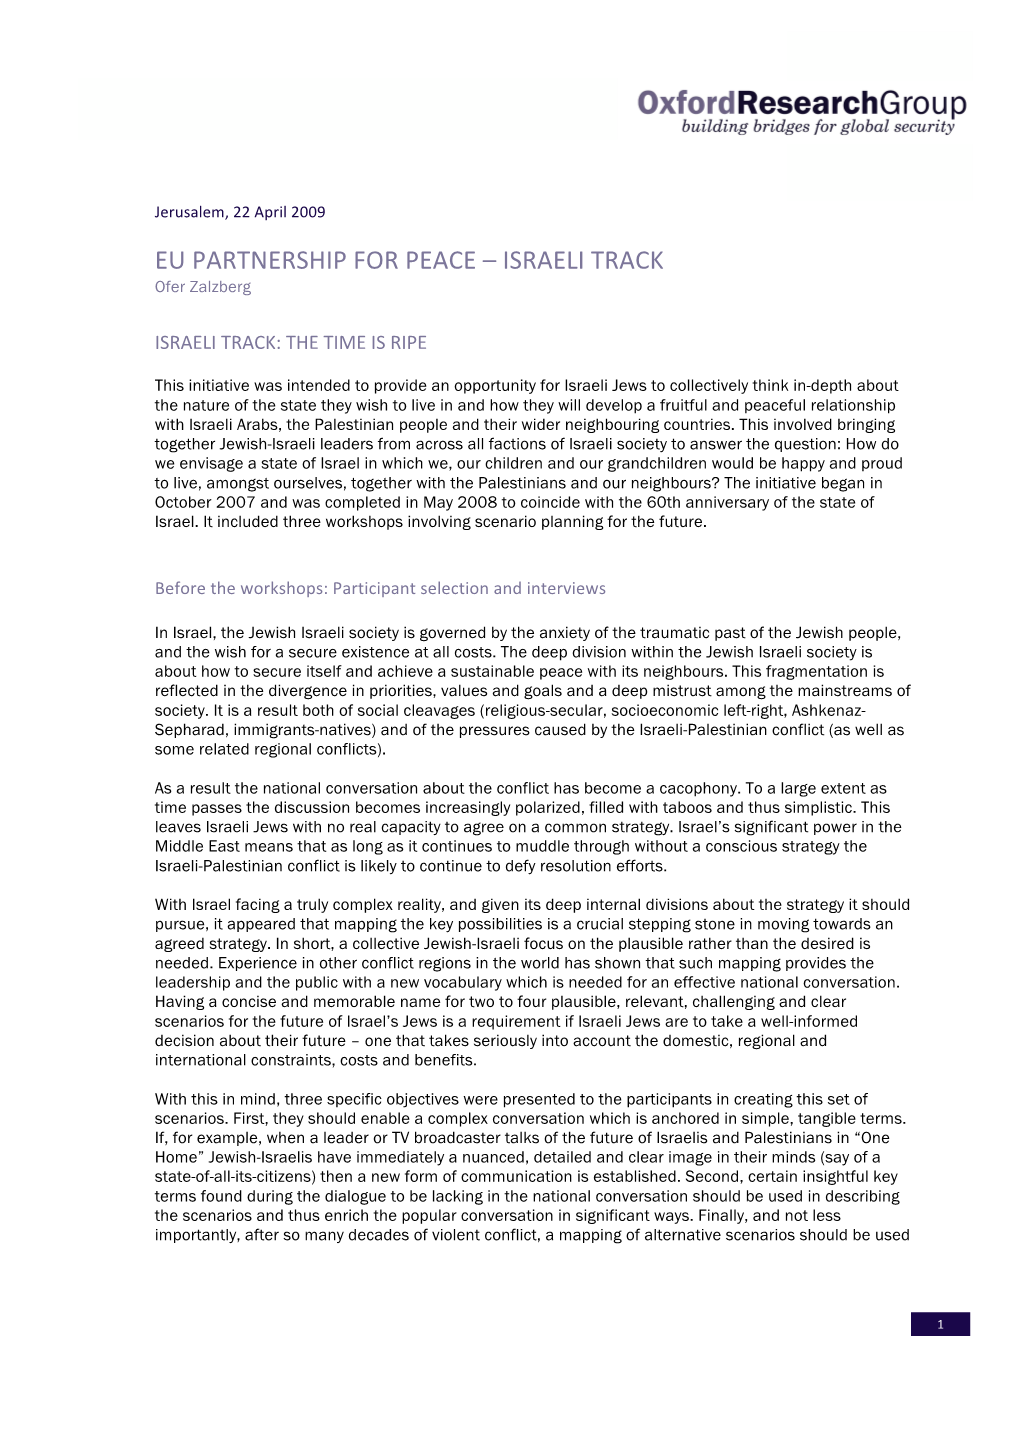 EU Partnership for Peace – Israeli Track